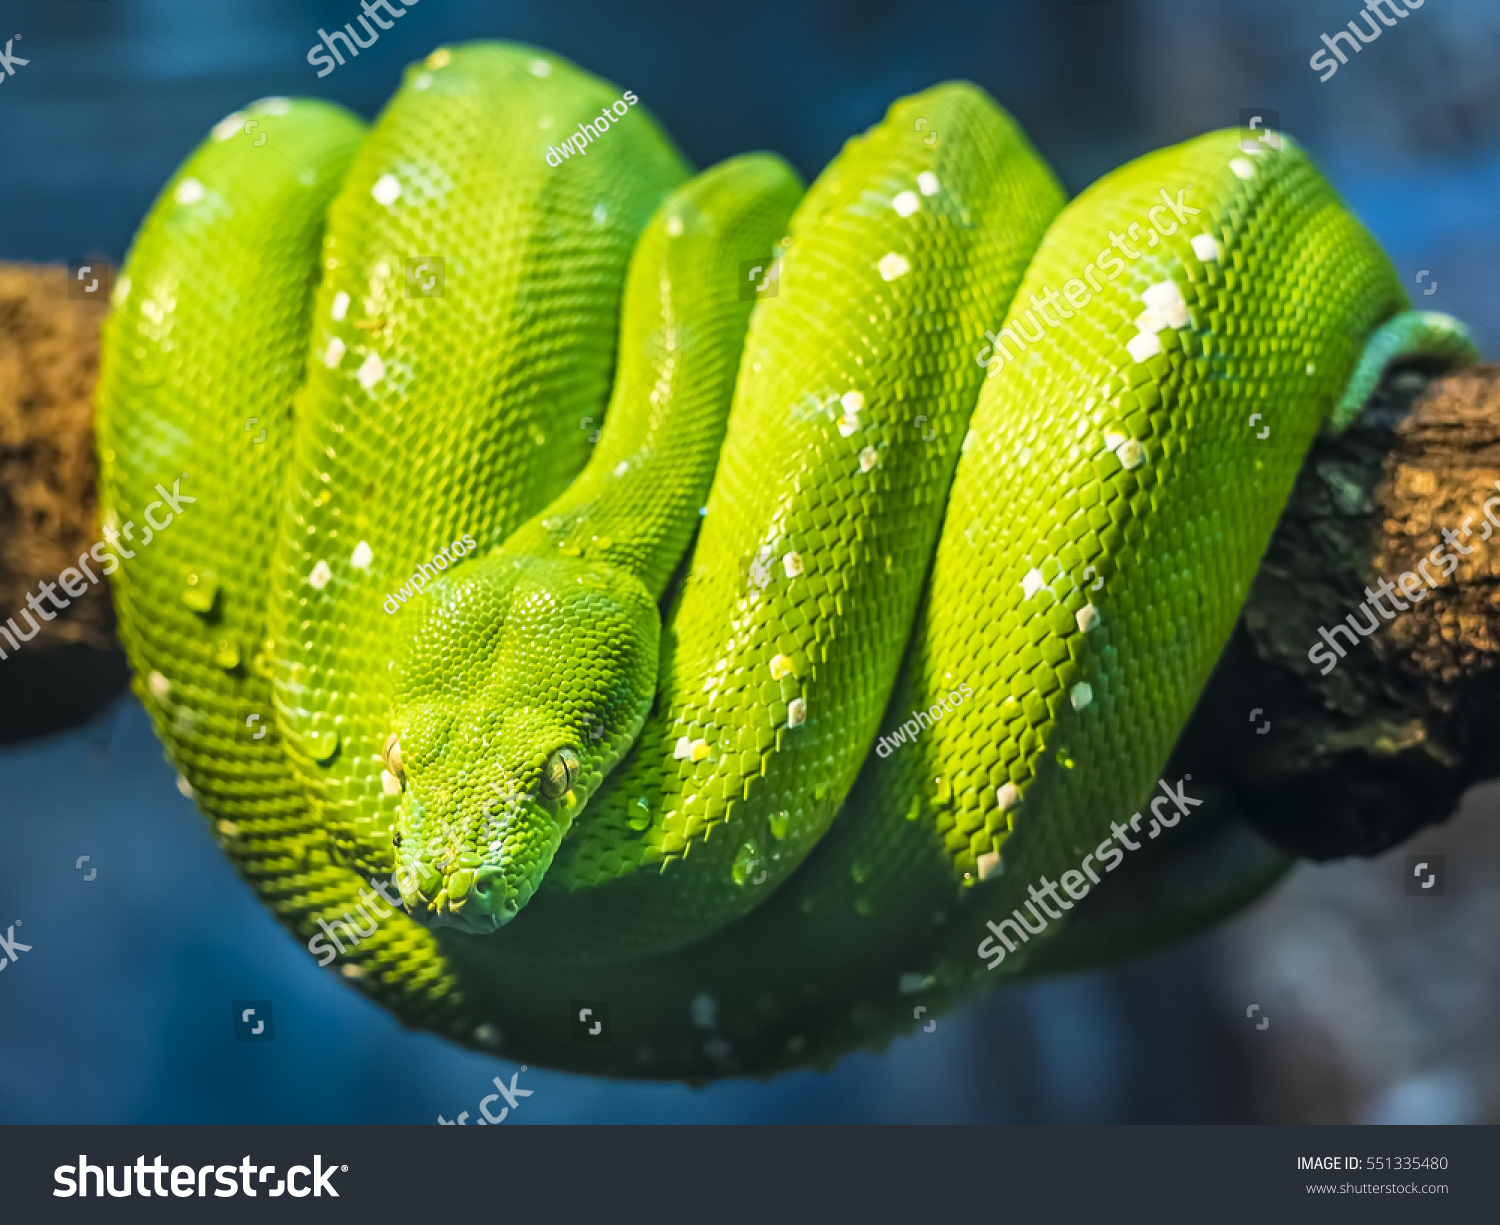 Closeup Green Tree Python Snake Stock Image Download Now